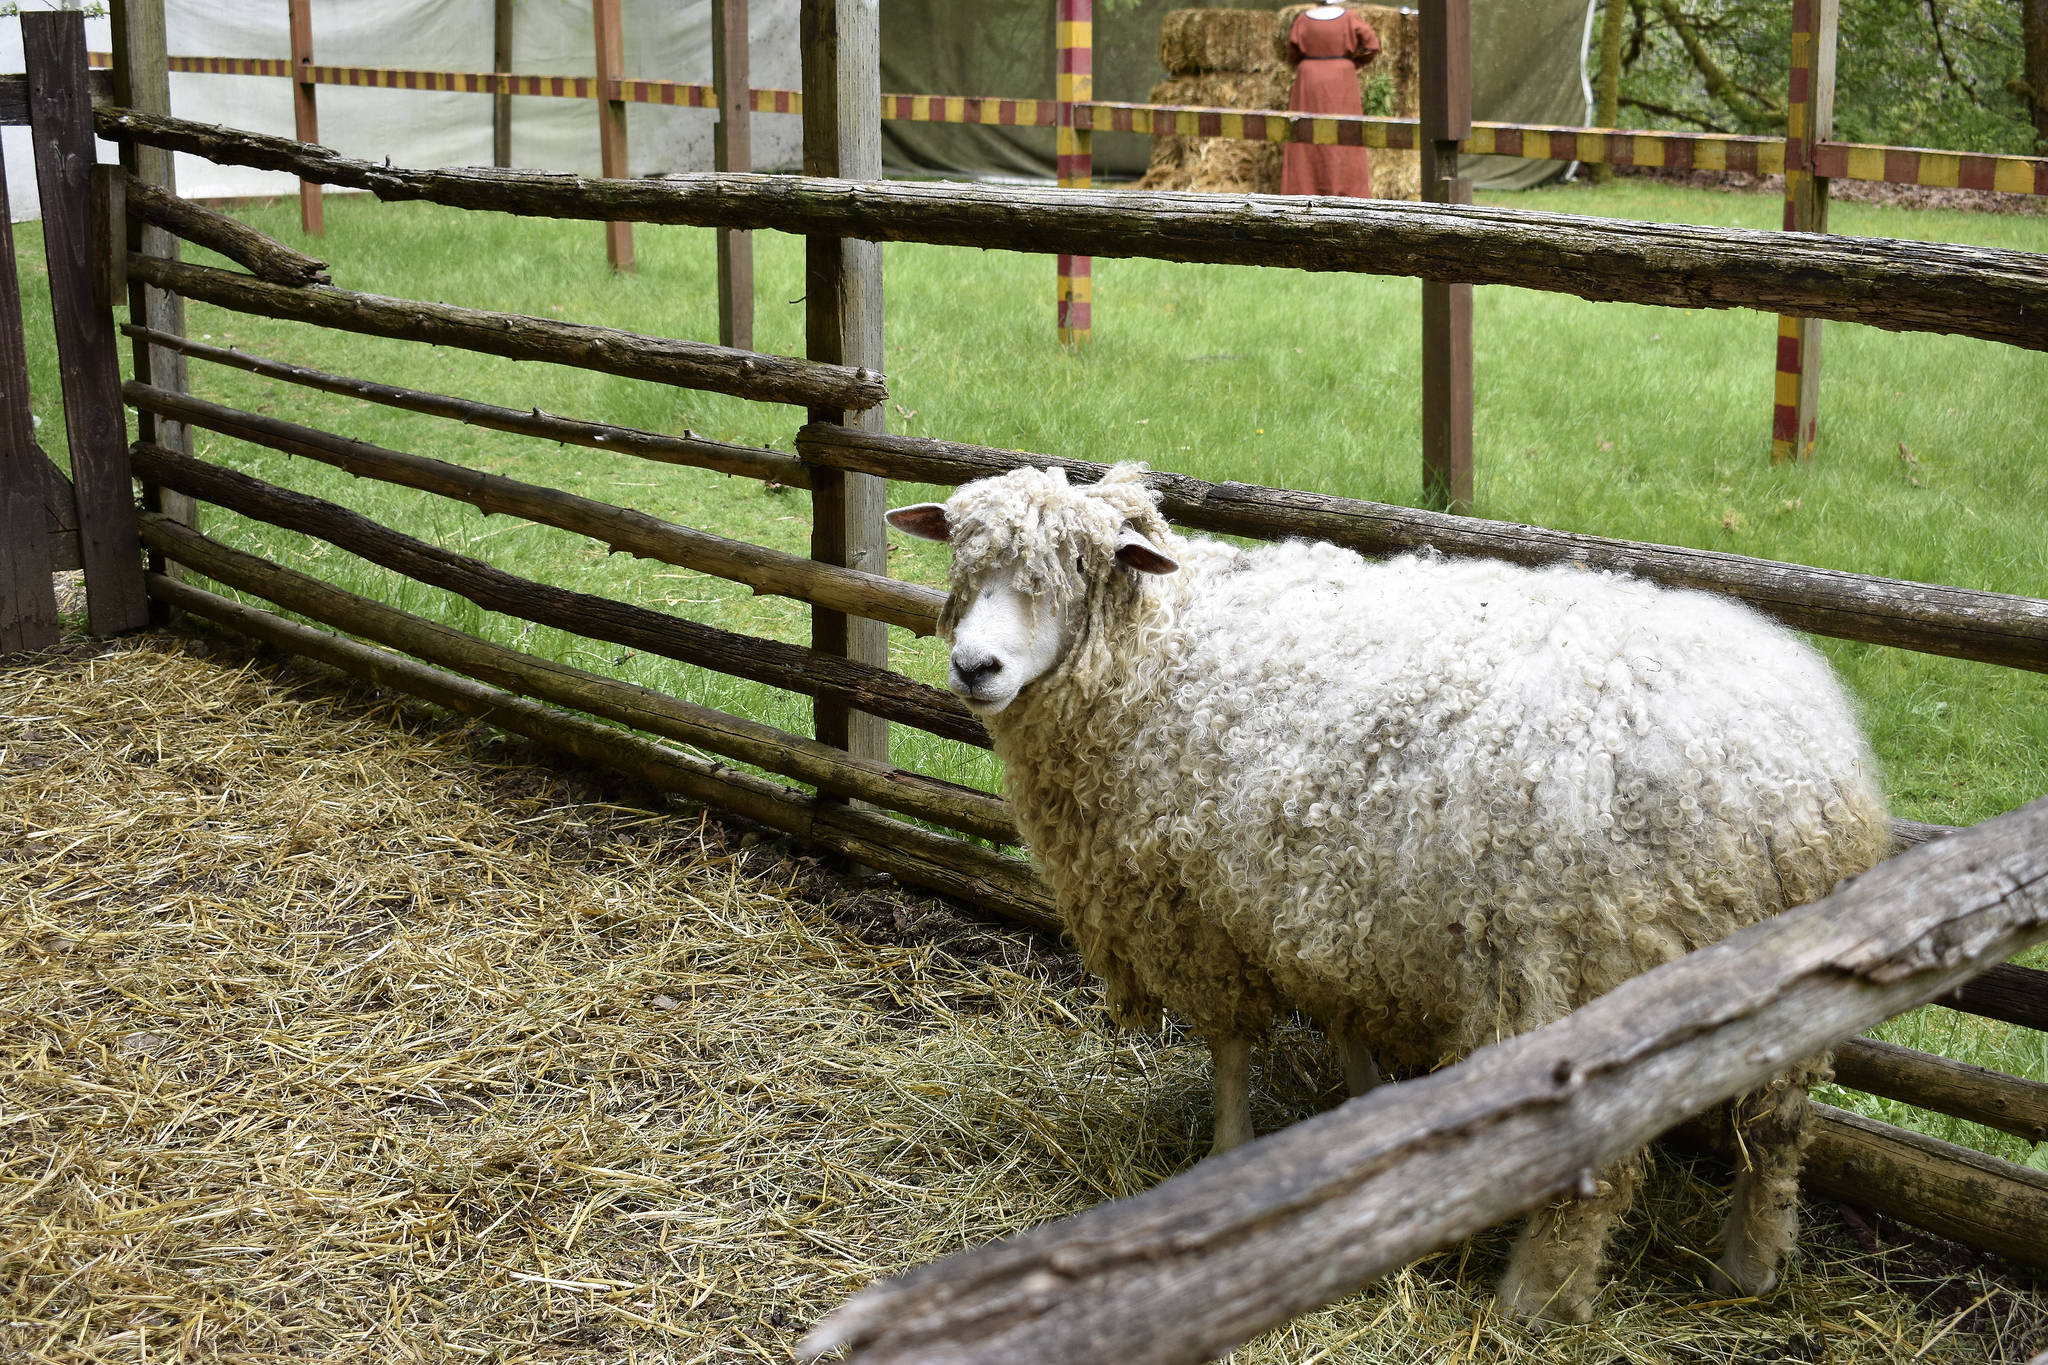 Sheep live at the Camlann Medieval Village. Raechel Dawson/staff photo